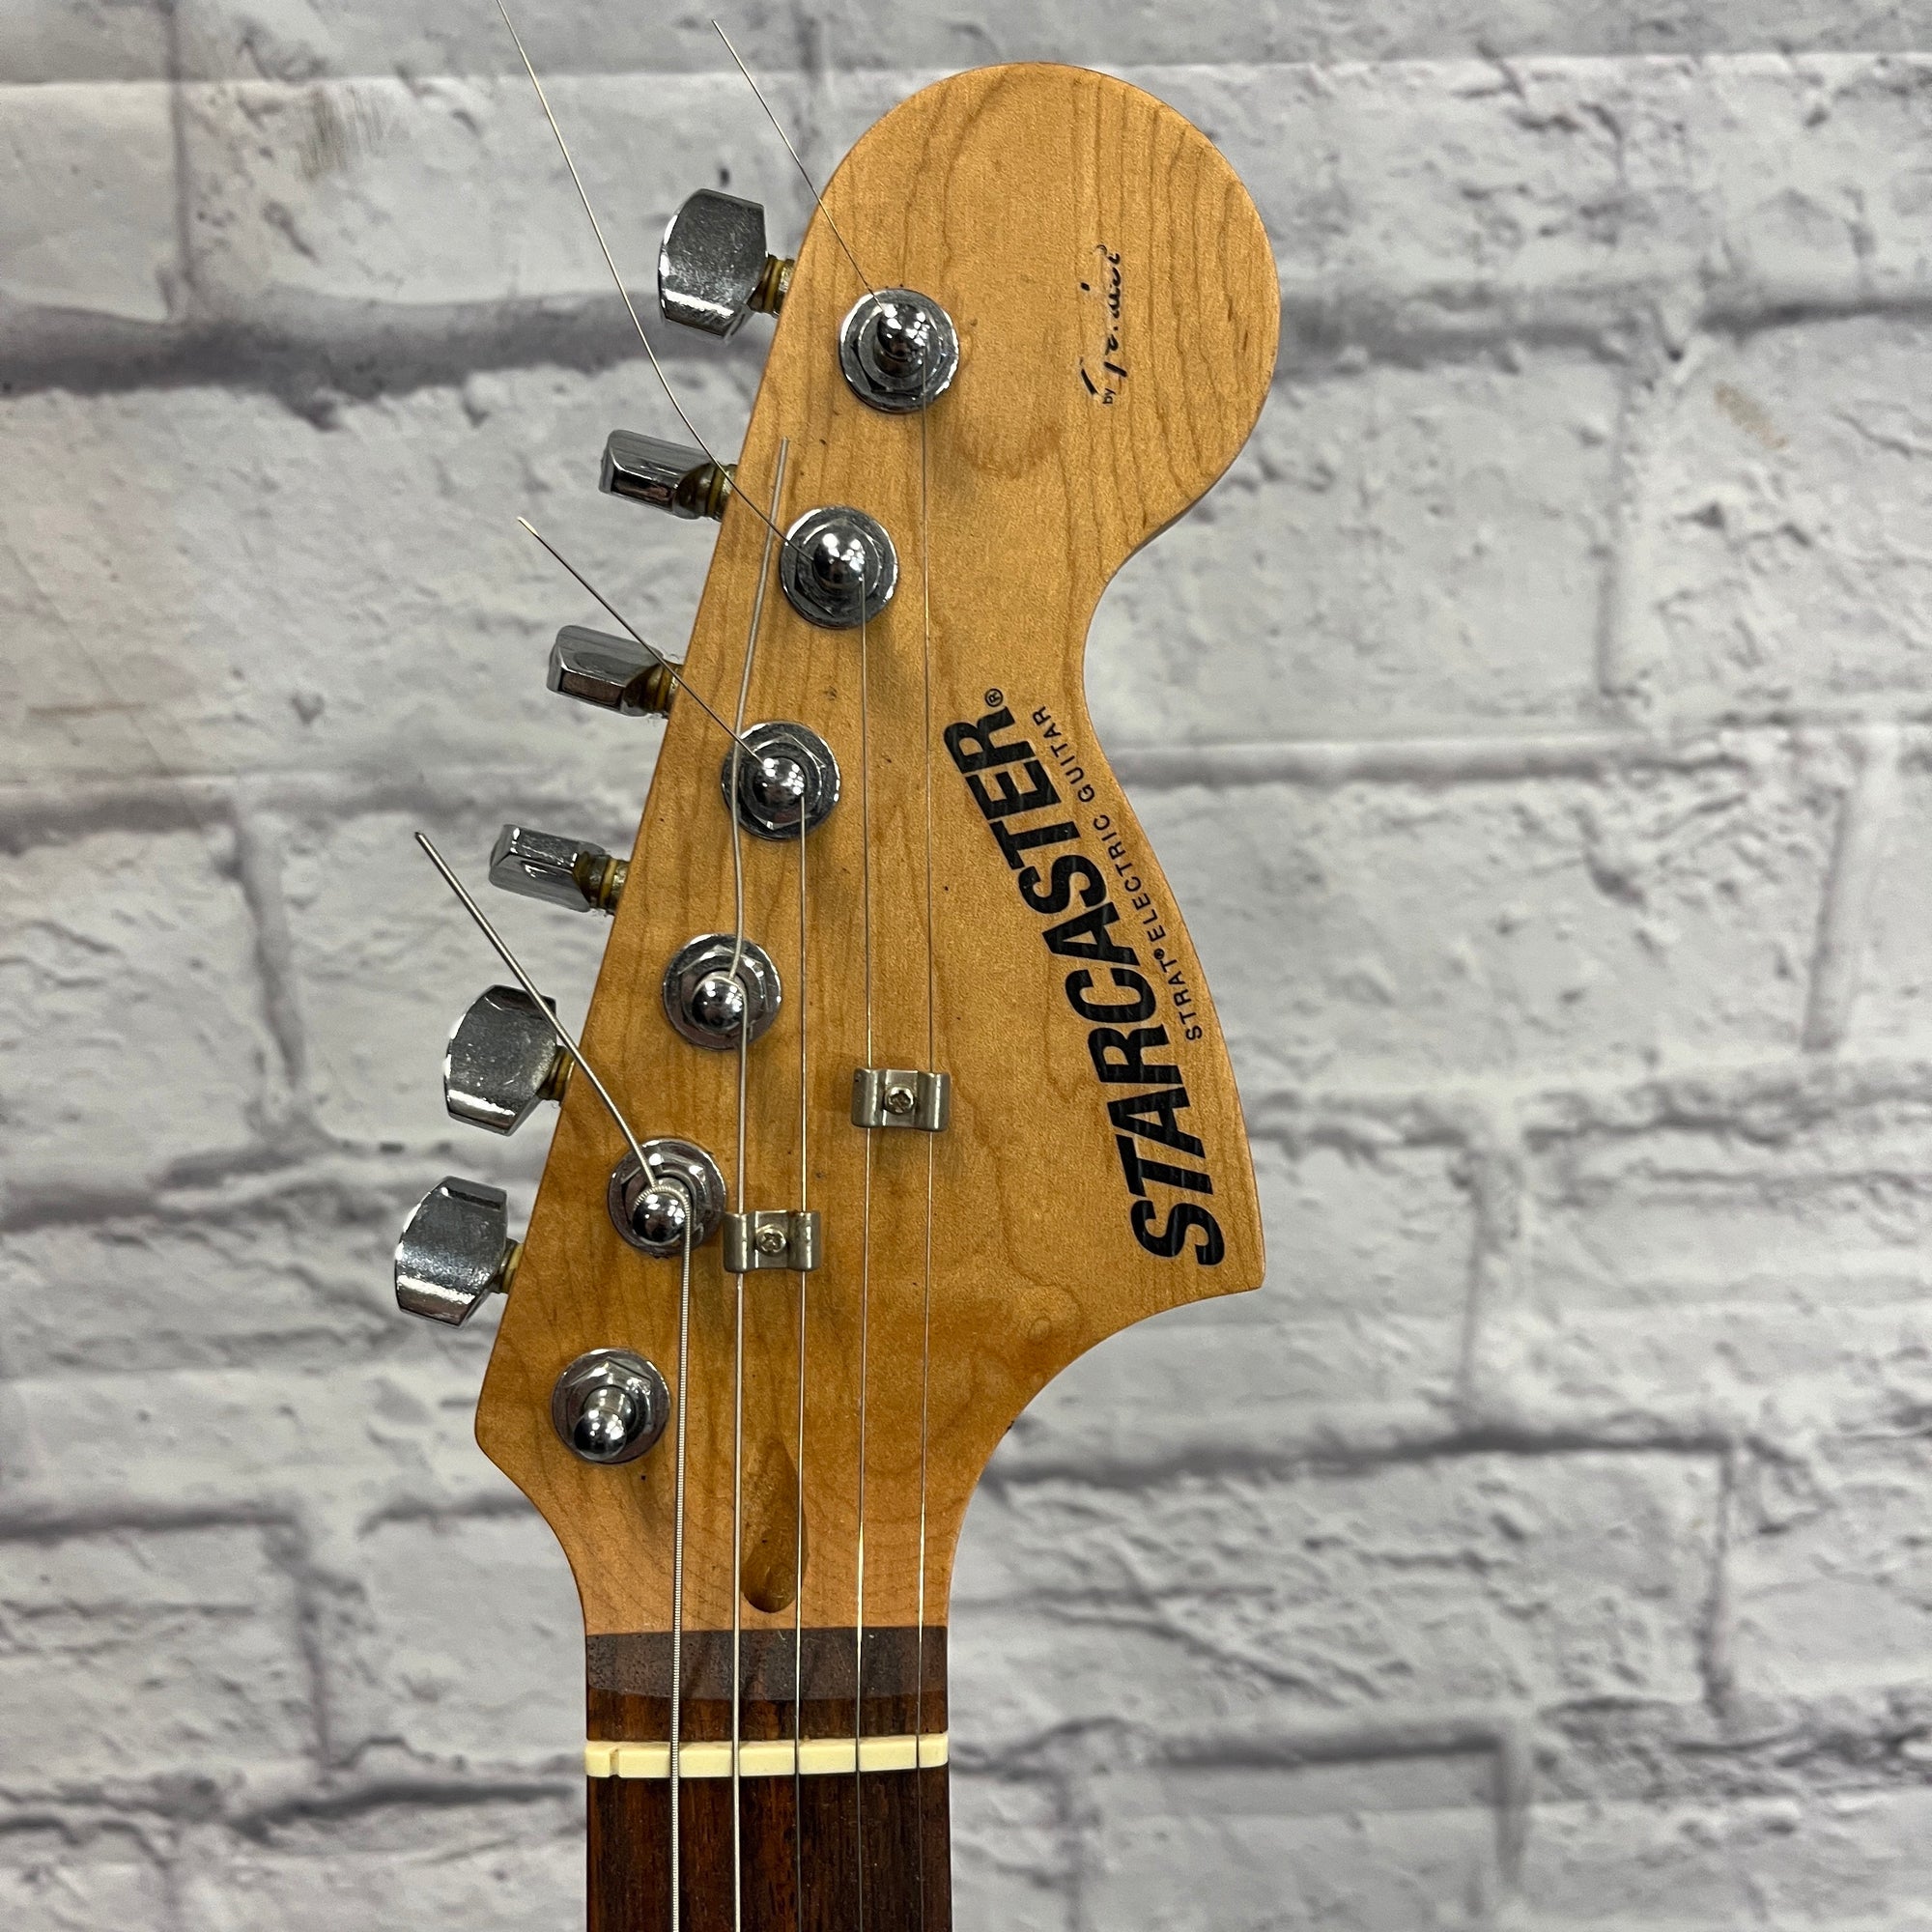 Fender Starcaster Sunburst Solid Body Electric Guitar, 51% OFF